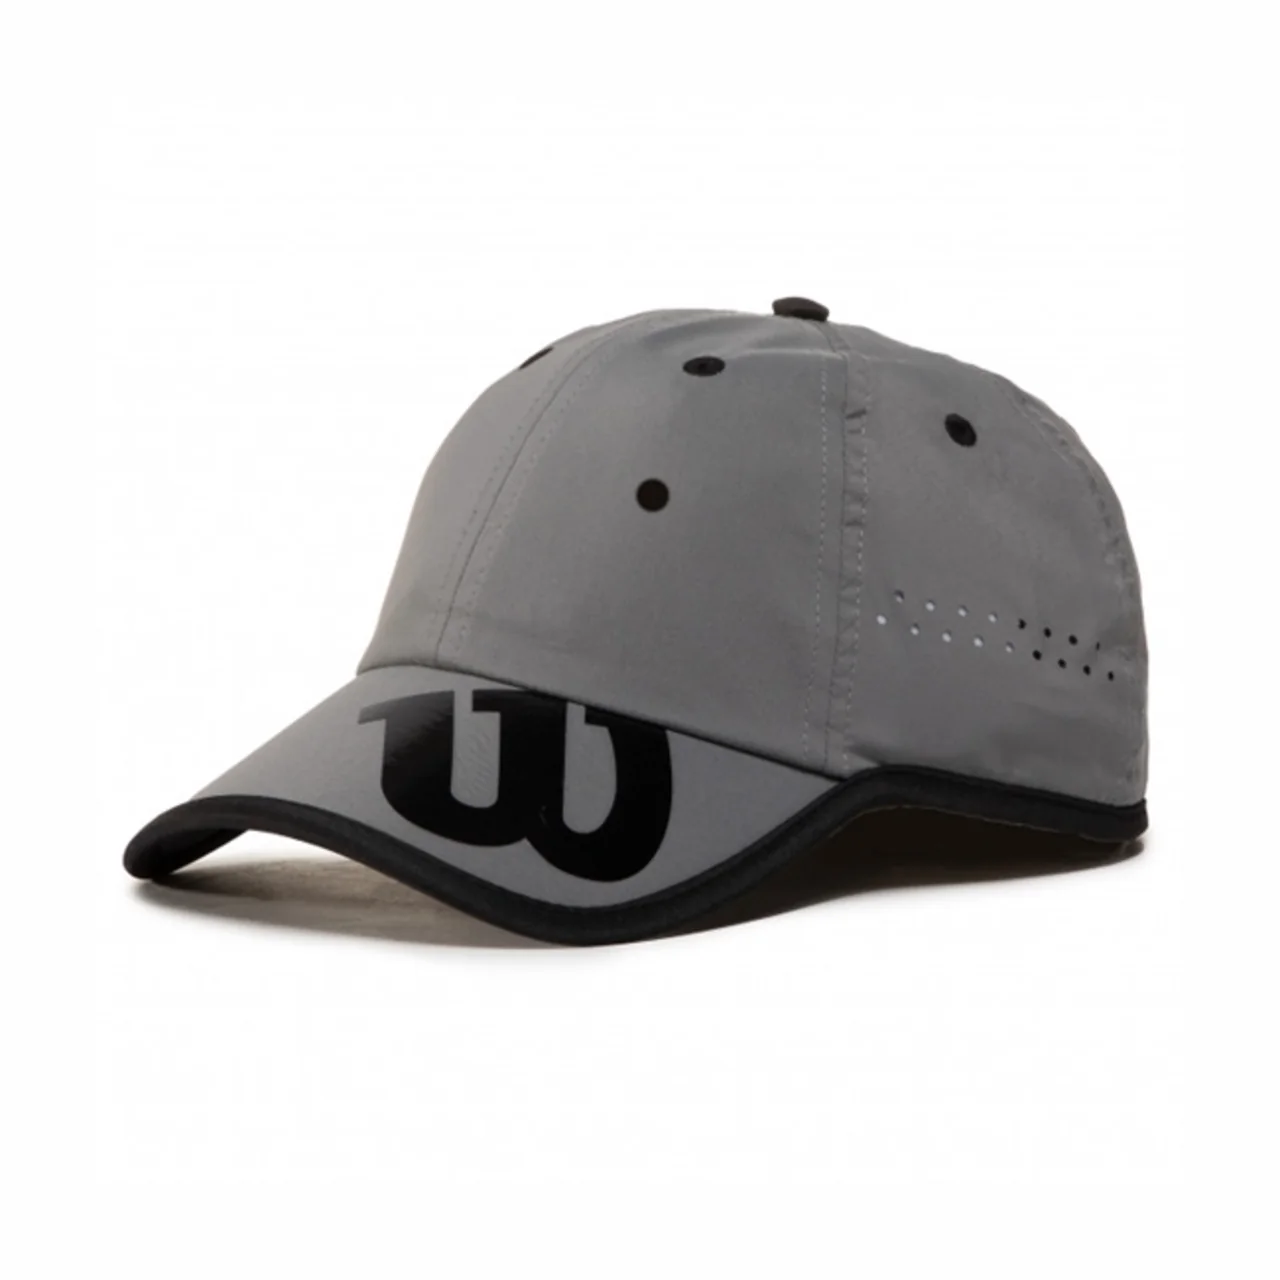 Wilson Brand Cap Grey/Black